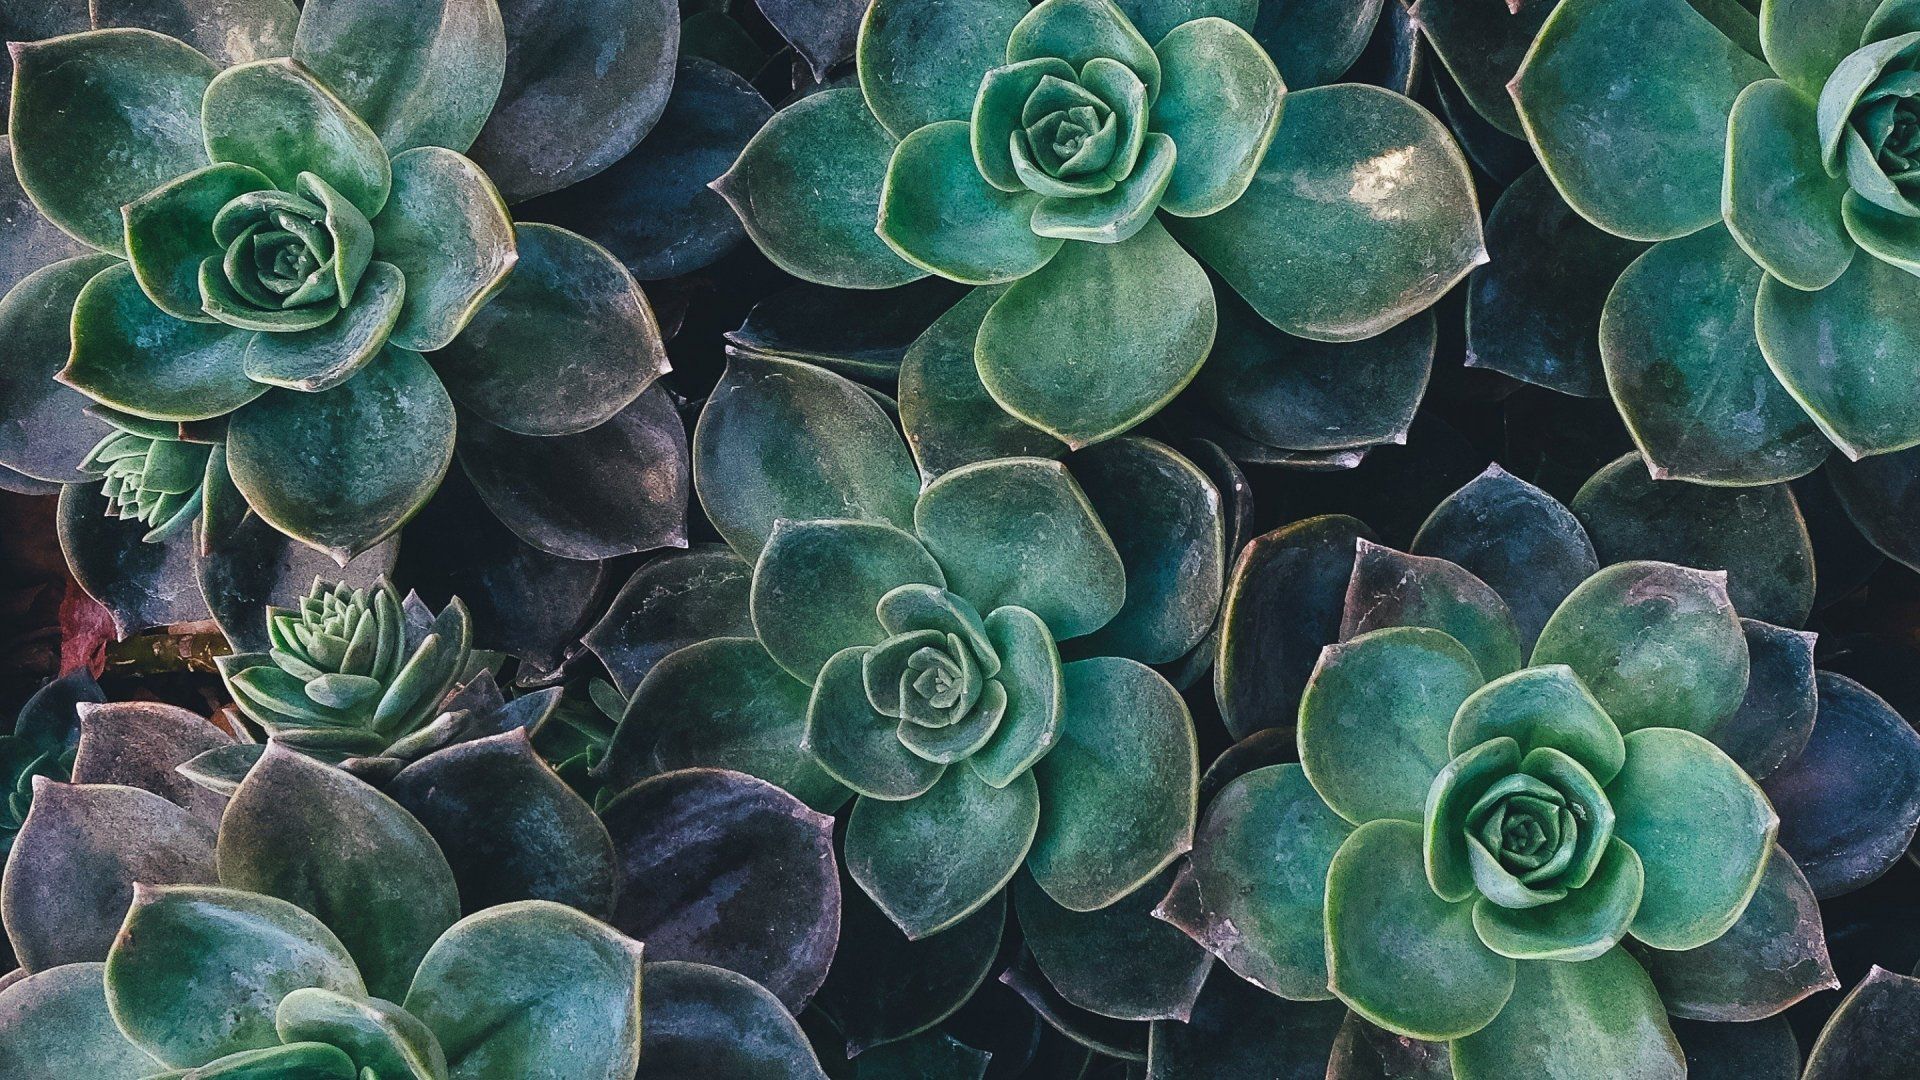 A close up of a group of succulents. - Plants, succulent